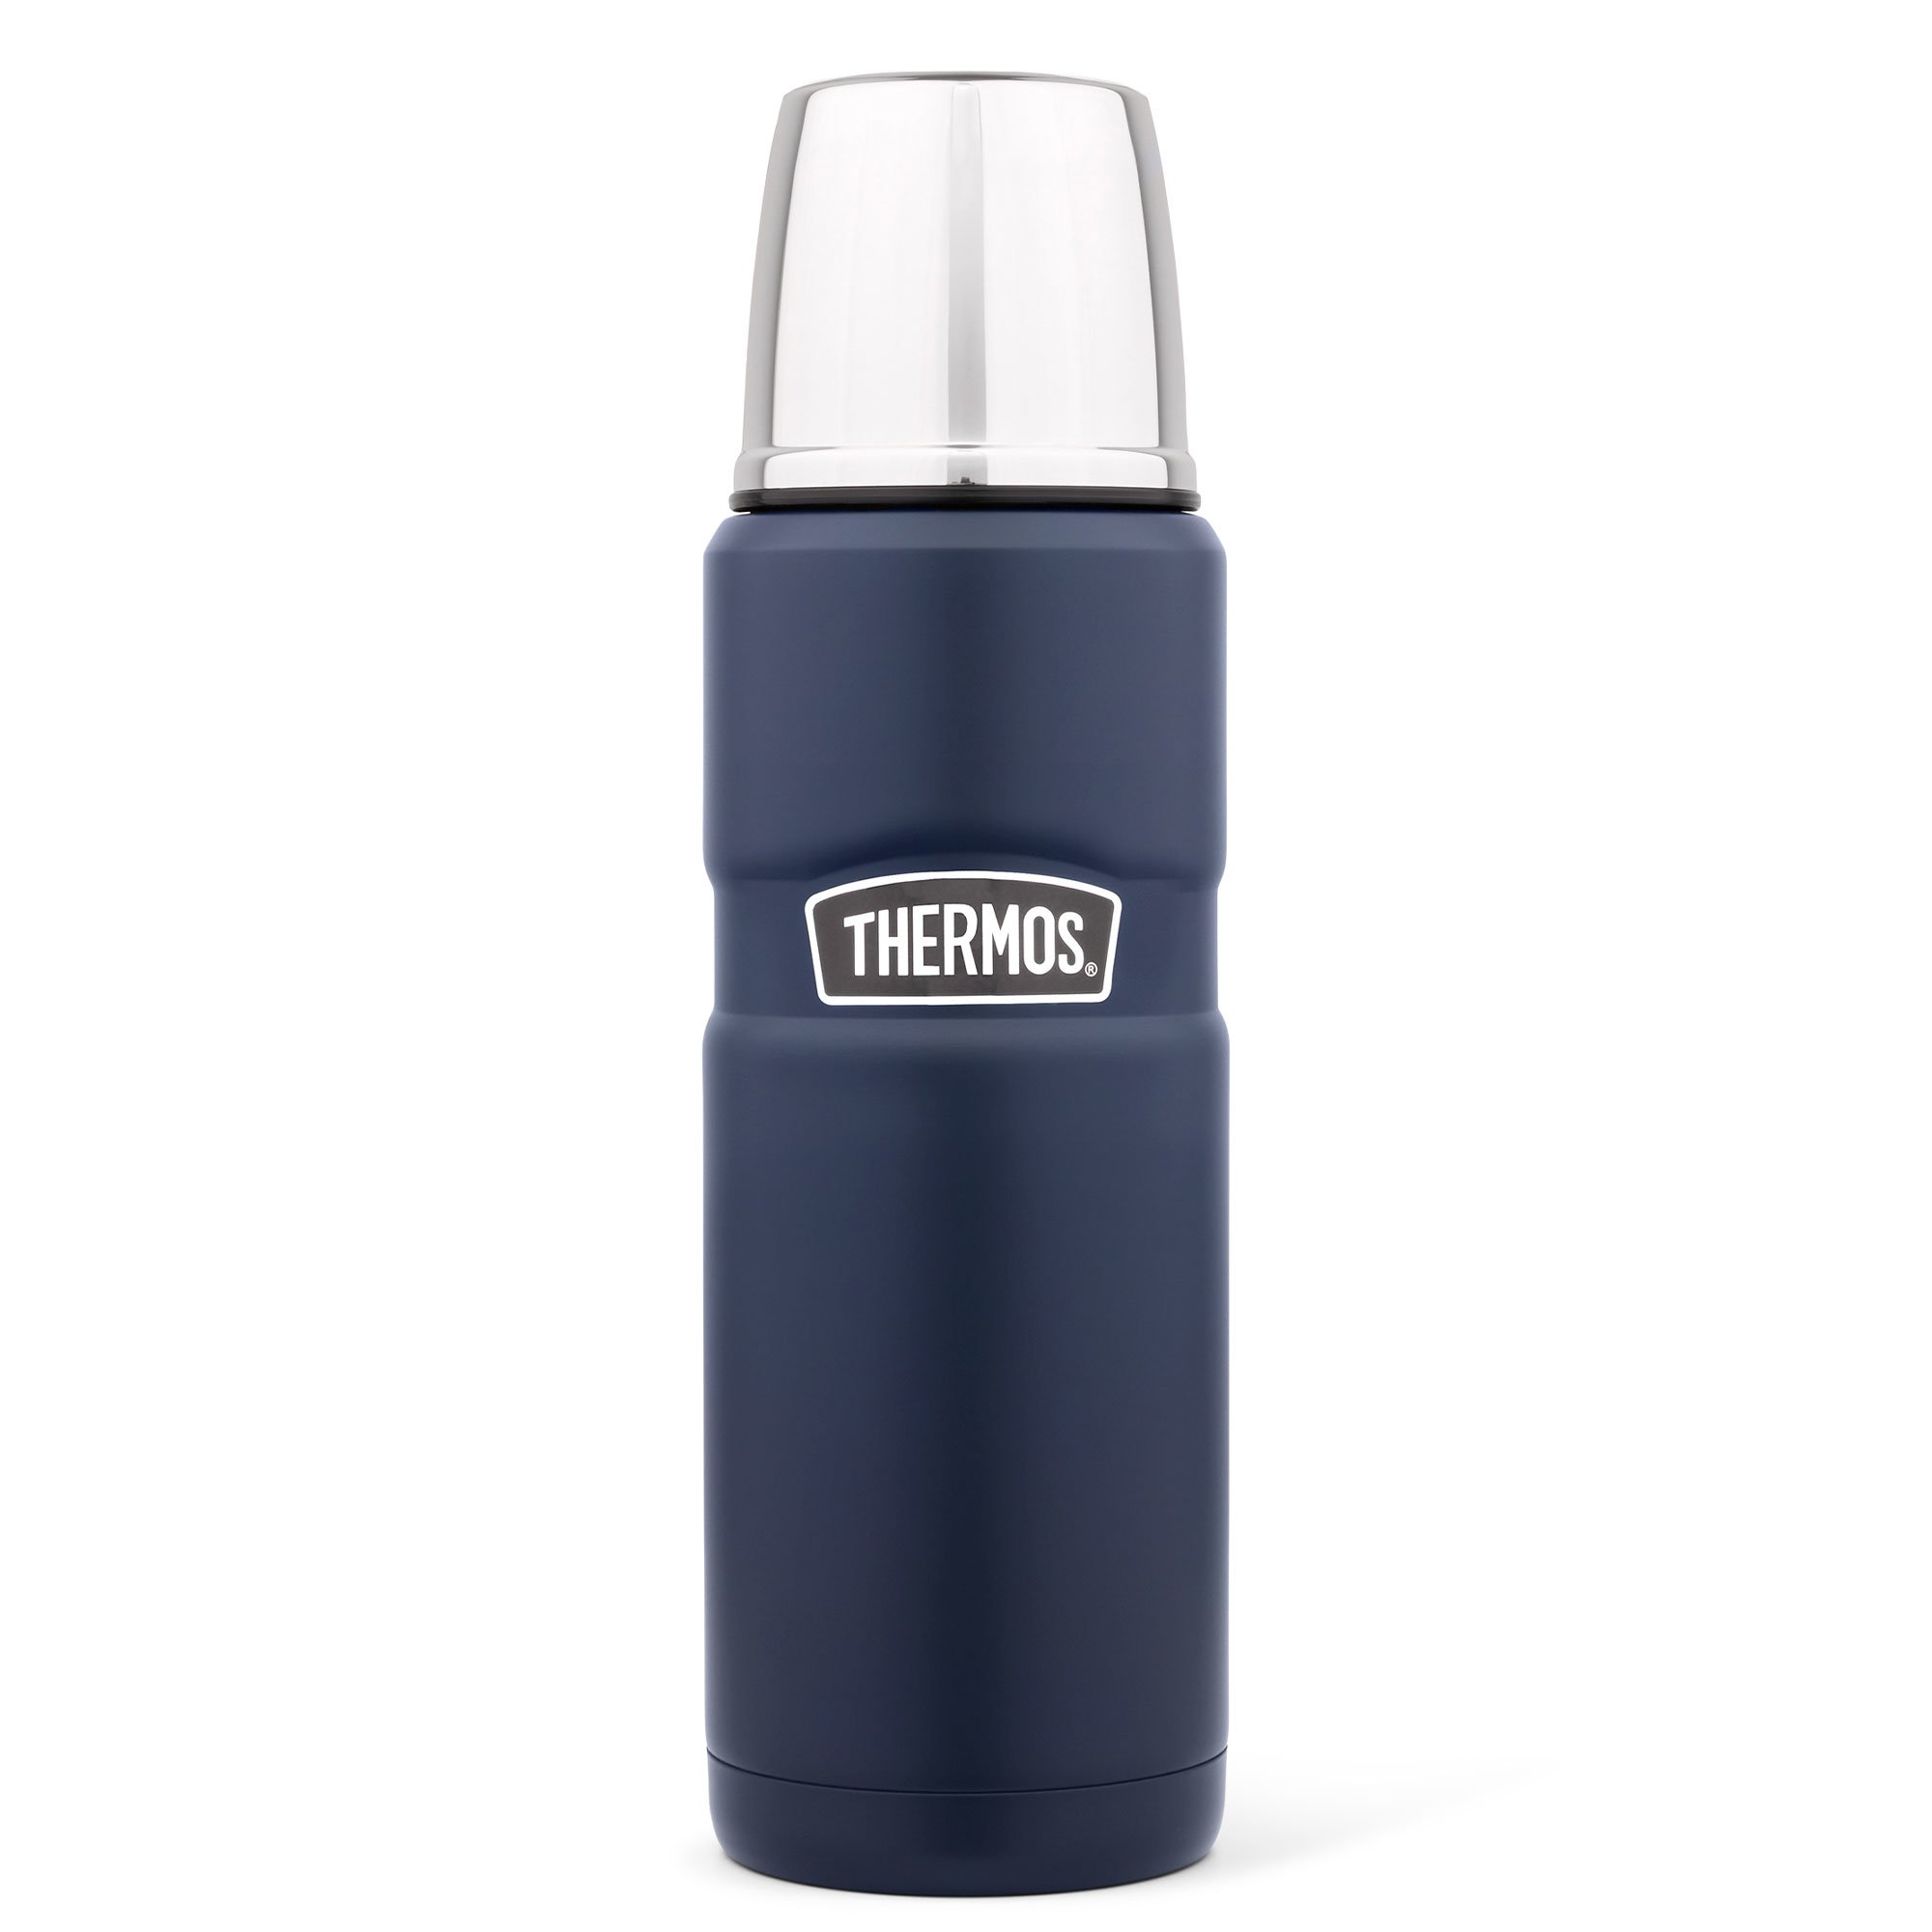 Thermos King termokande 0,5 liter navy